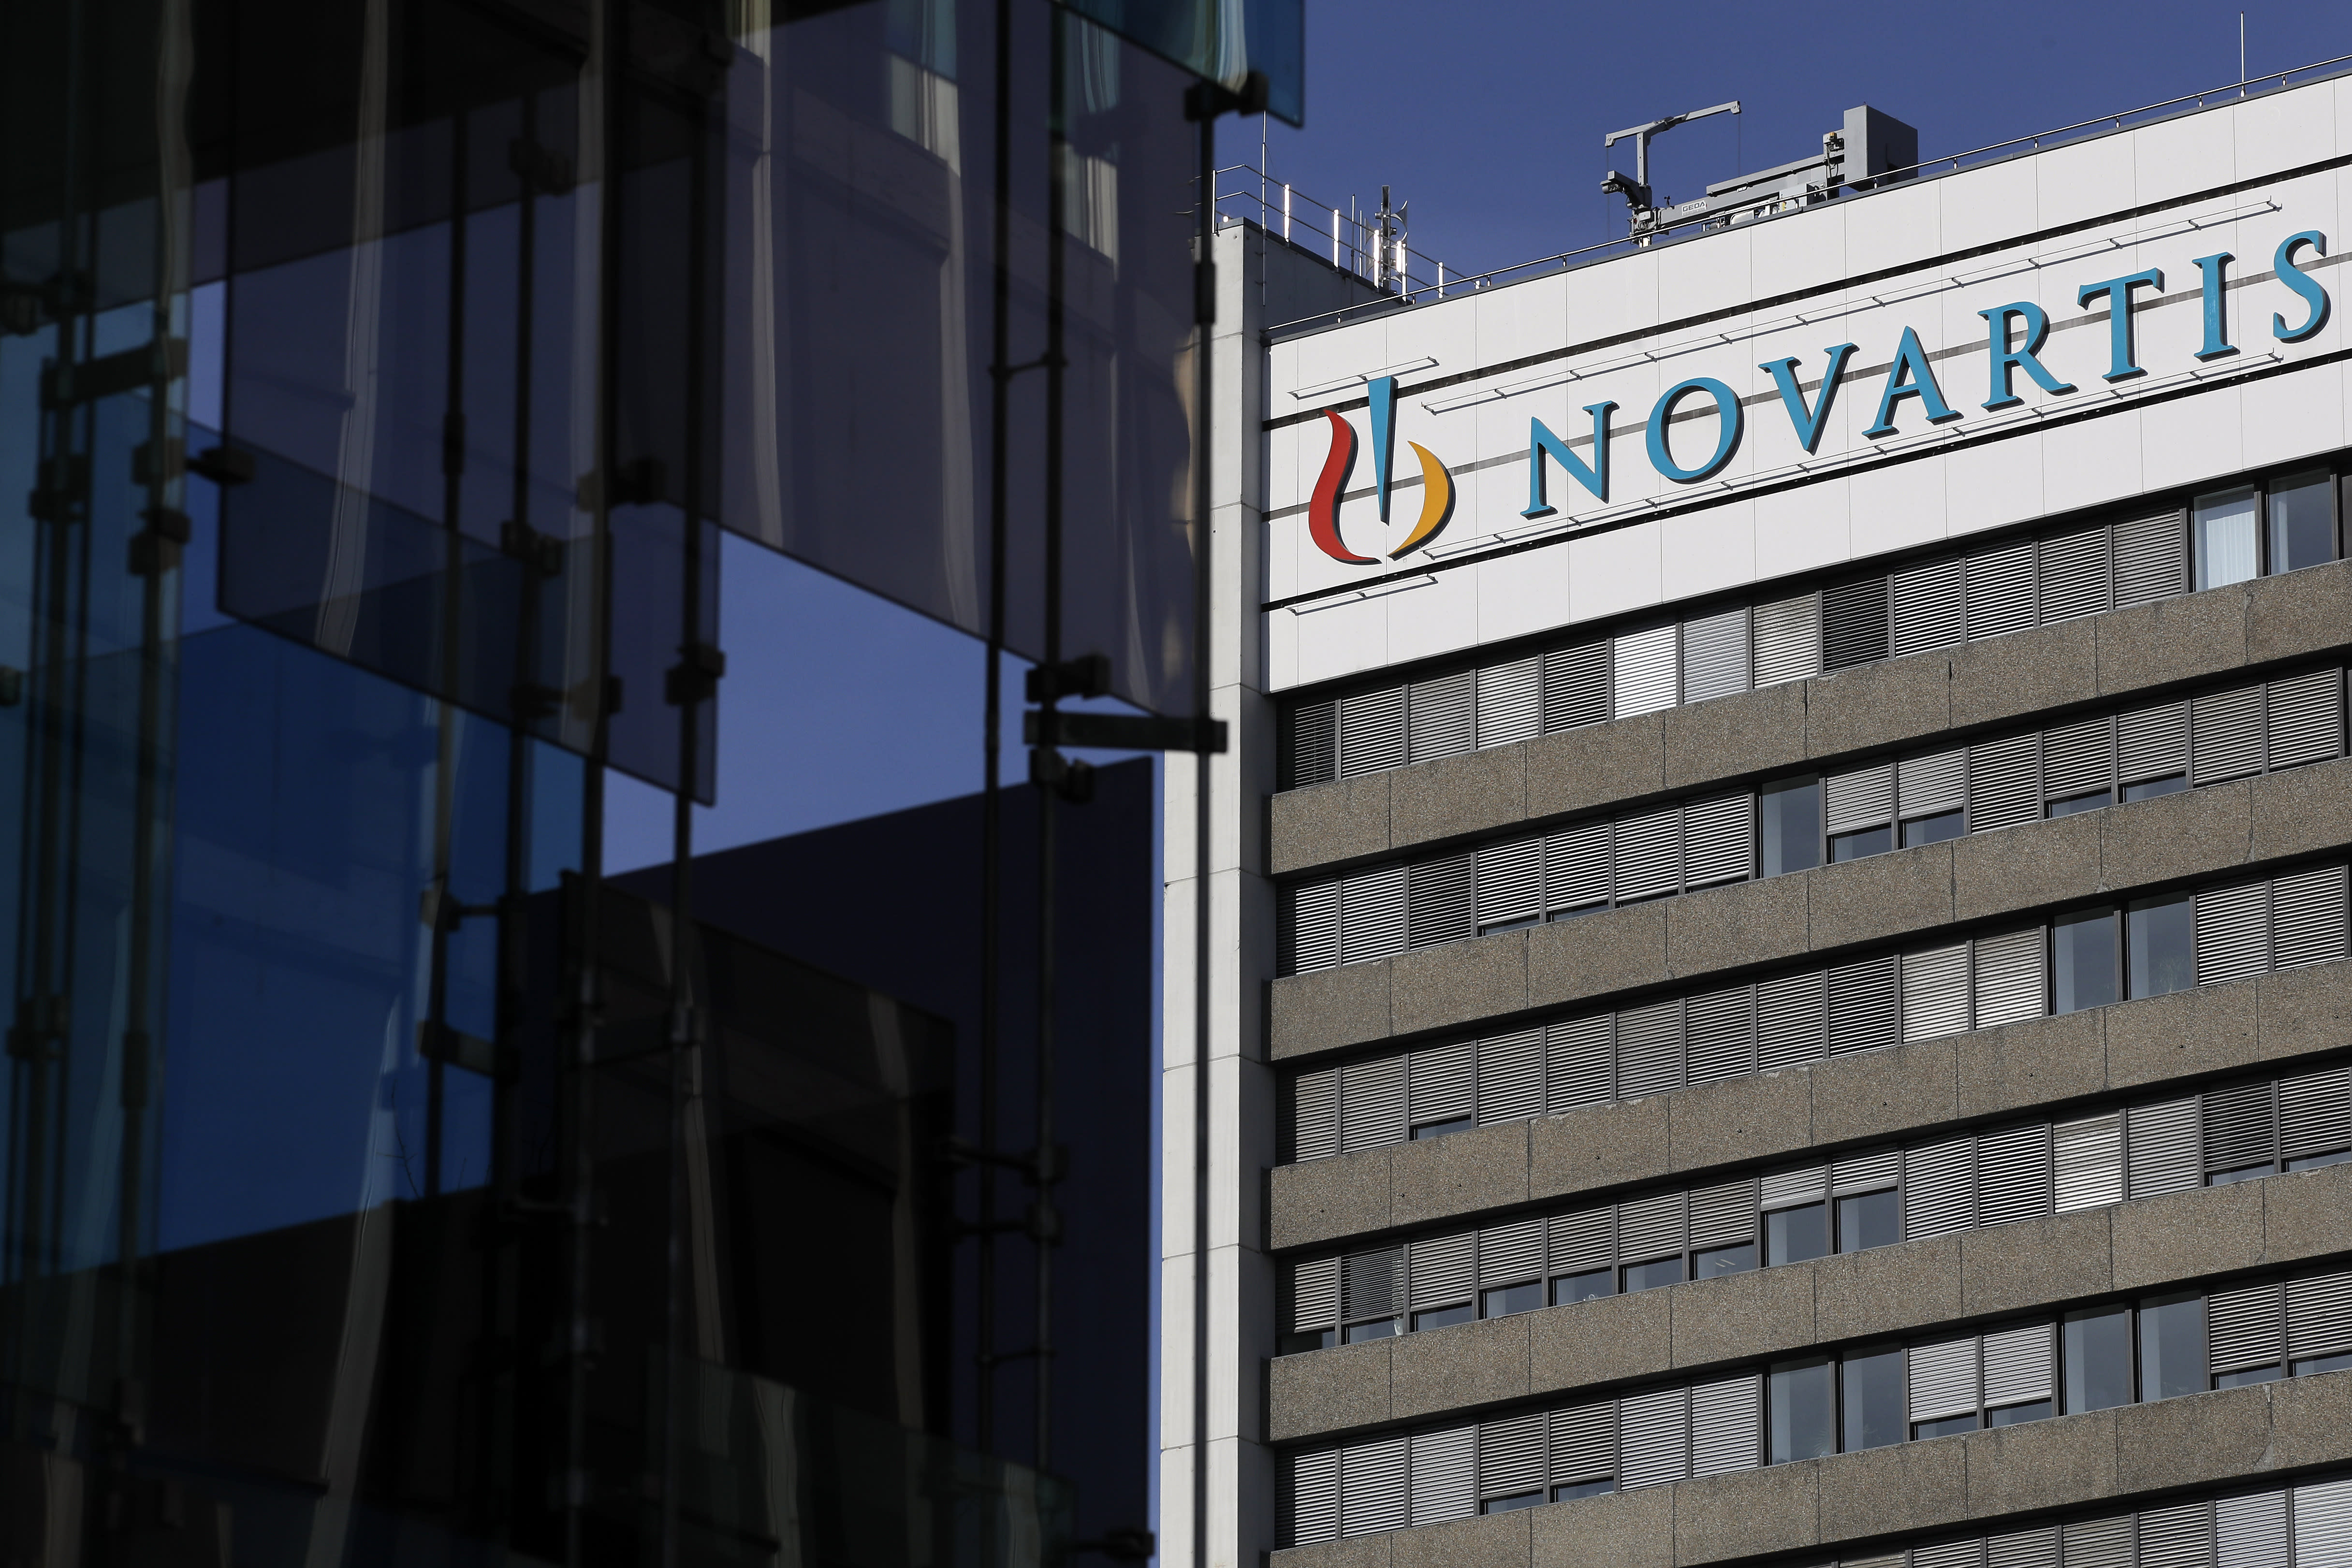 Unit Sandoz milik Novartis mulai diperdagangkan dengan harga 24 franc Swiss setelah menyelesaikan penjualan